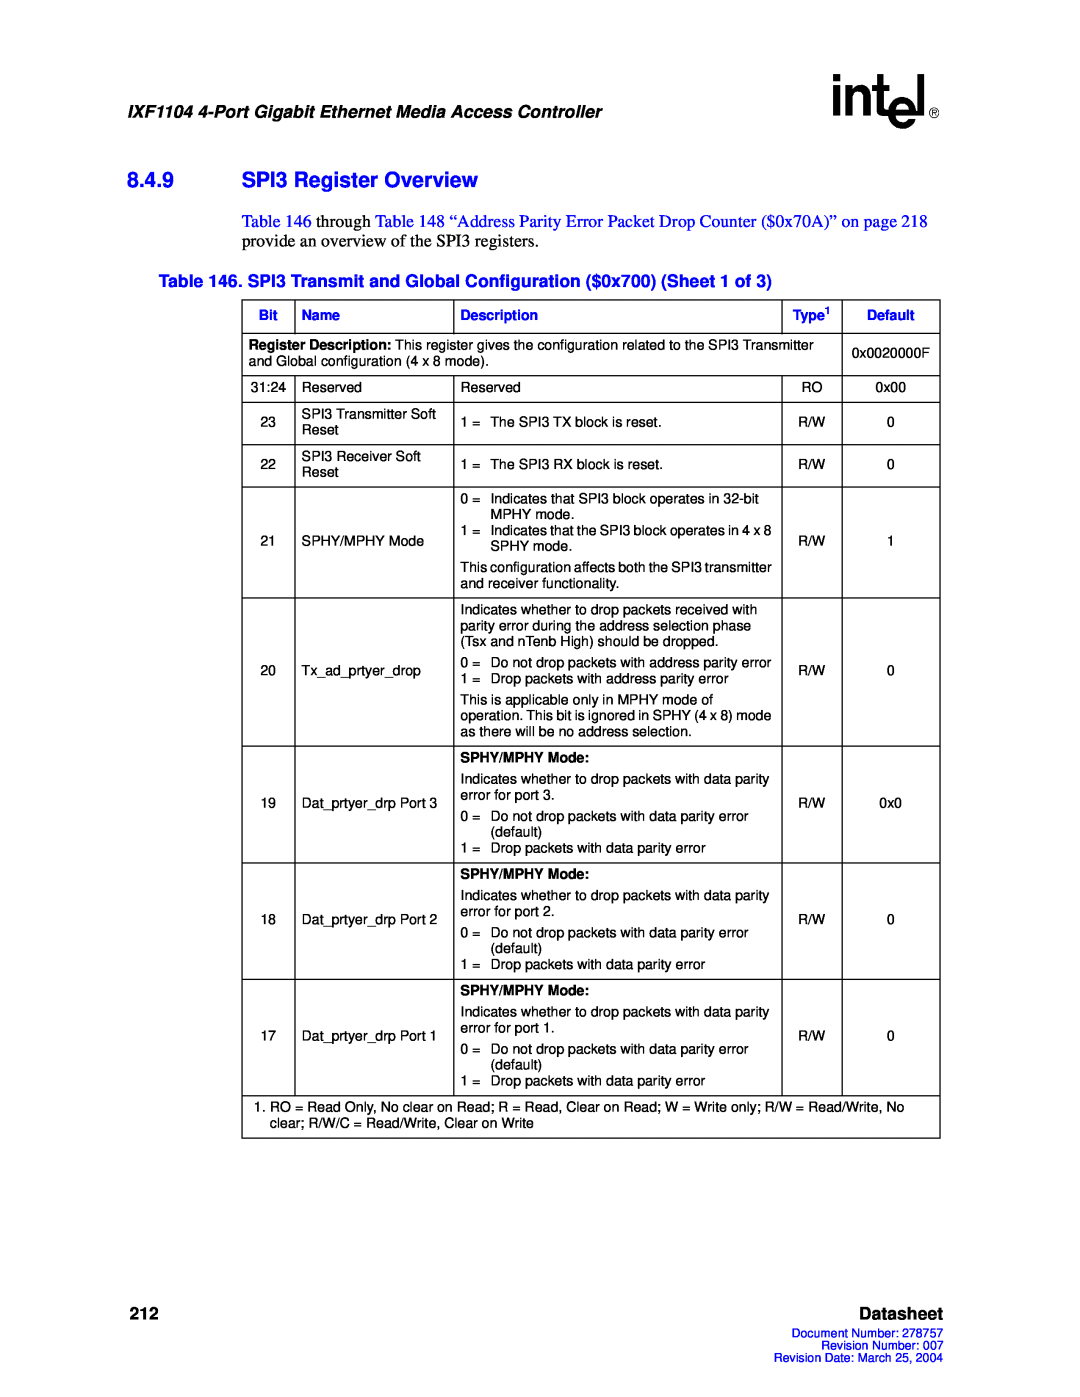 Intel IXF1104 manual 8.4.9SPI3 Register Overview, Datasheet, SPHY/MPHY Mode 